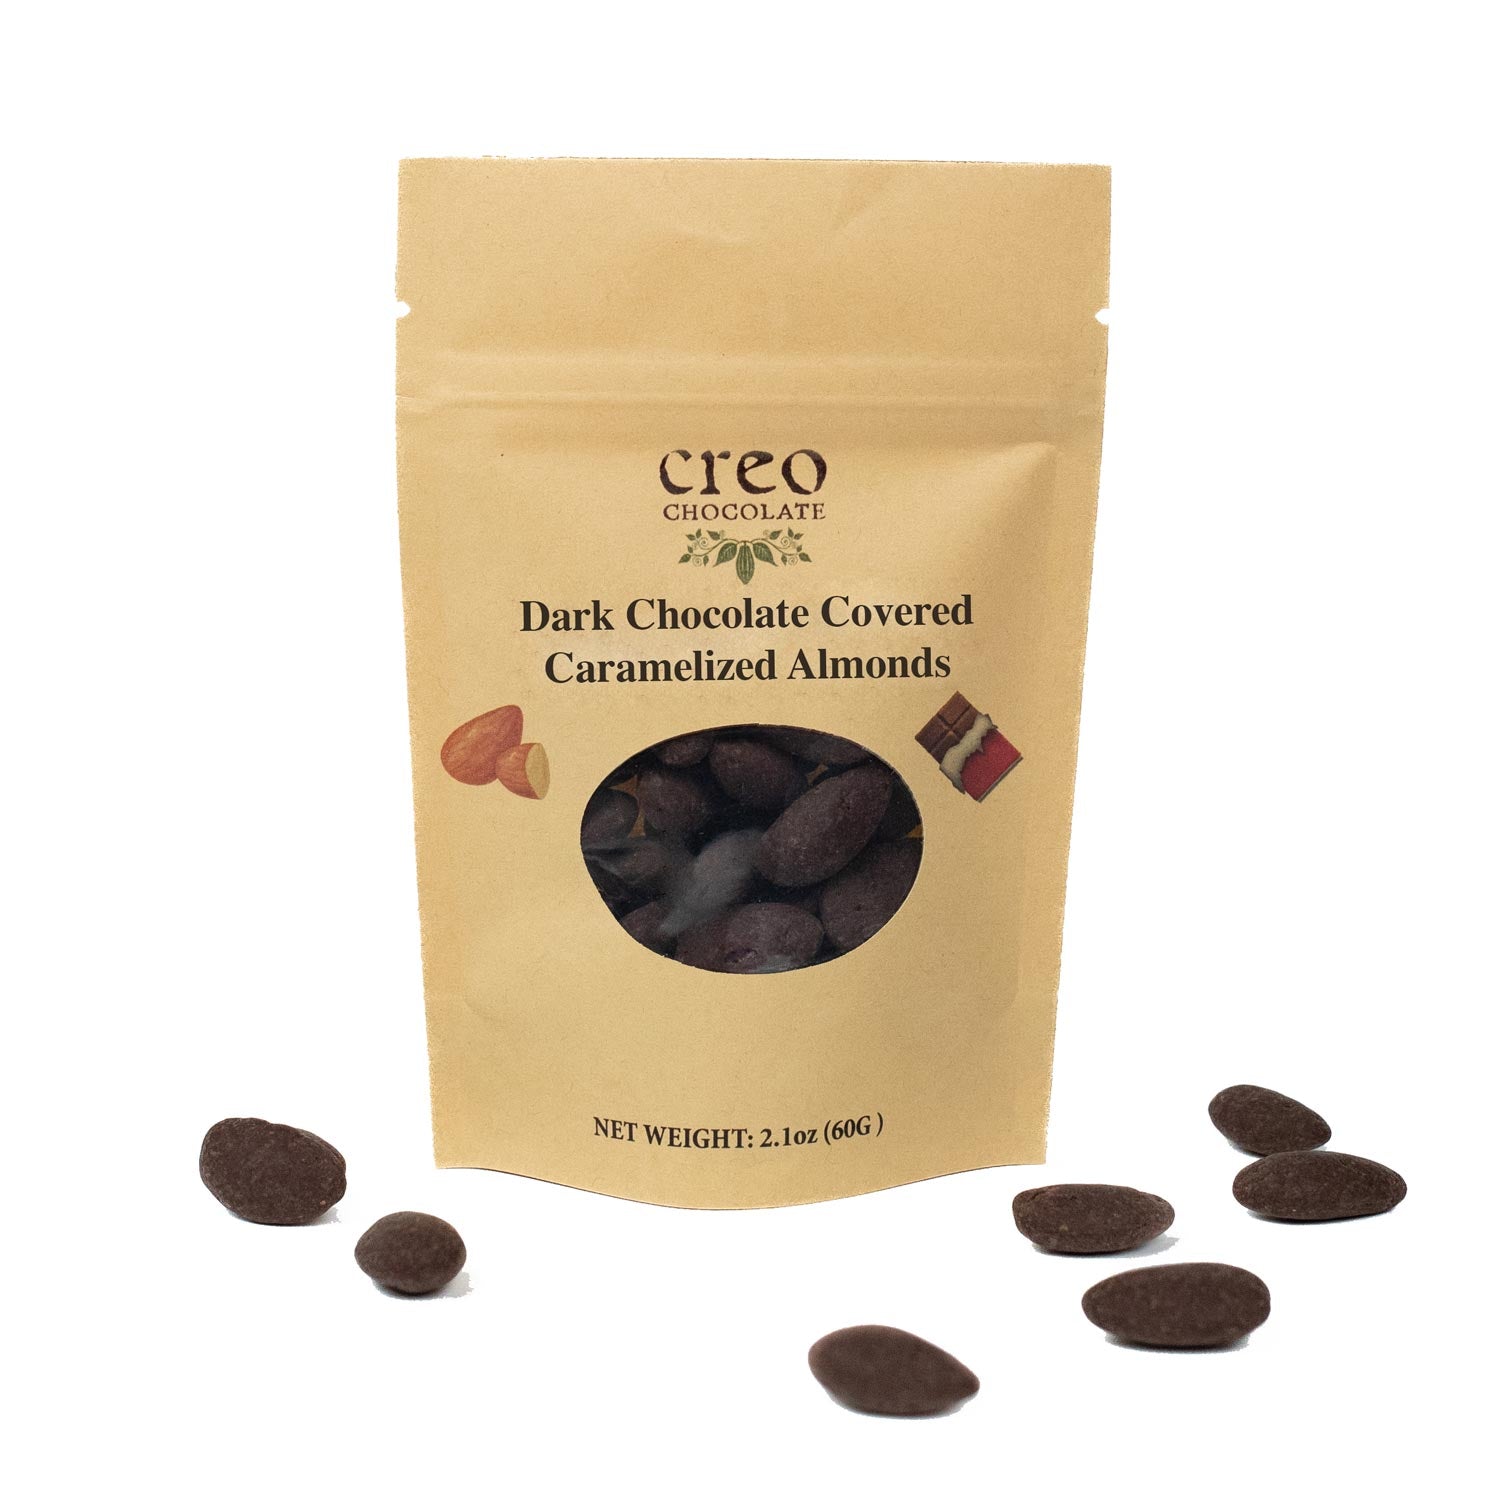 Dark Chocolate Covered Caramelized Almonds